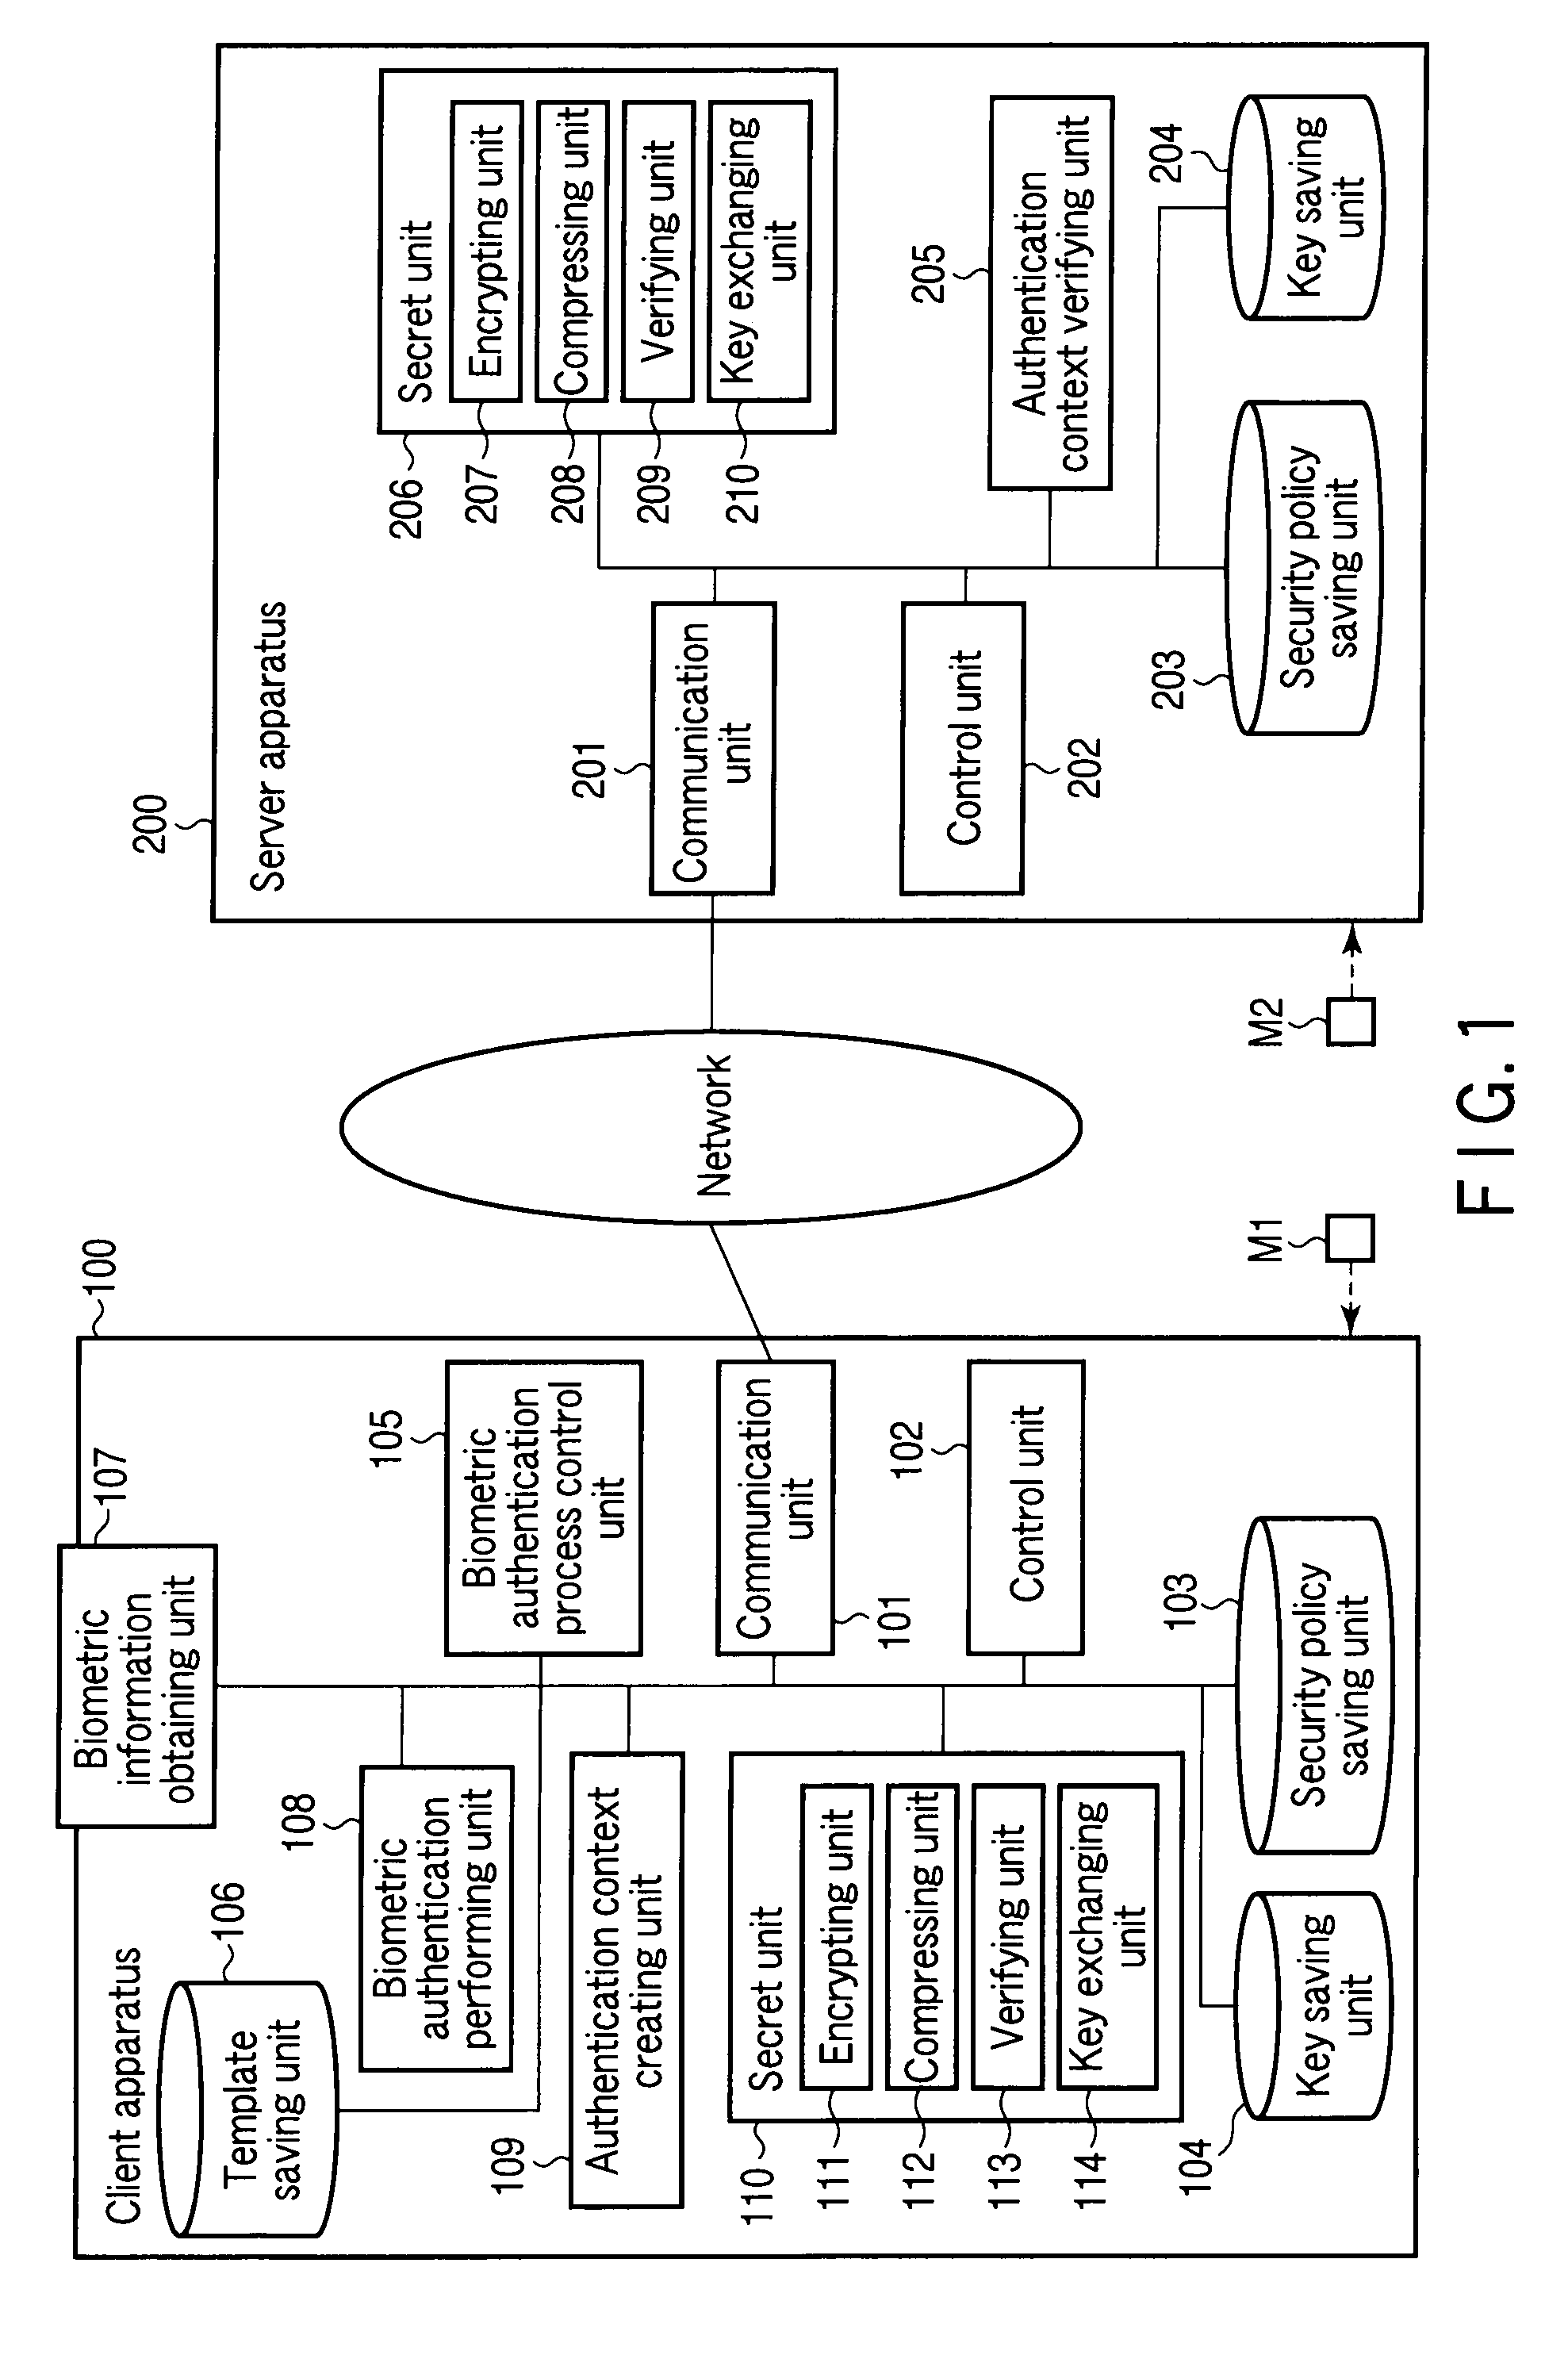 Client apparatus, server apparatus, and program